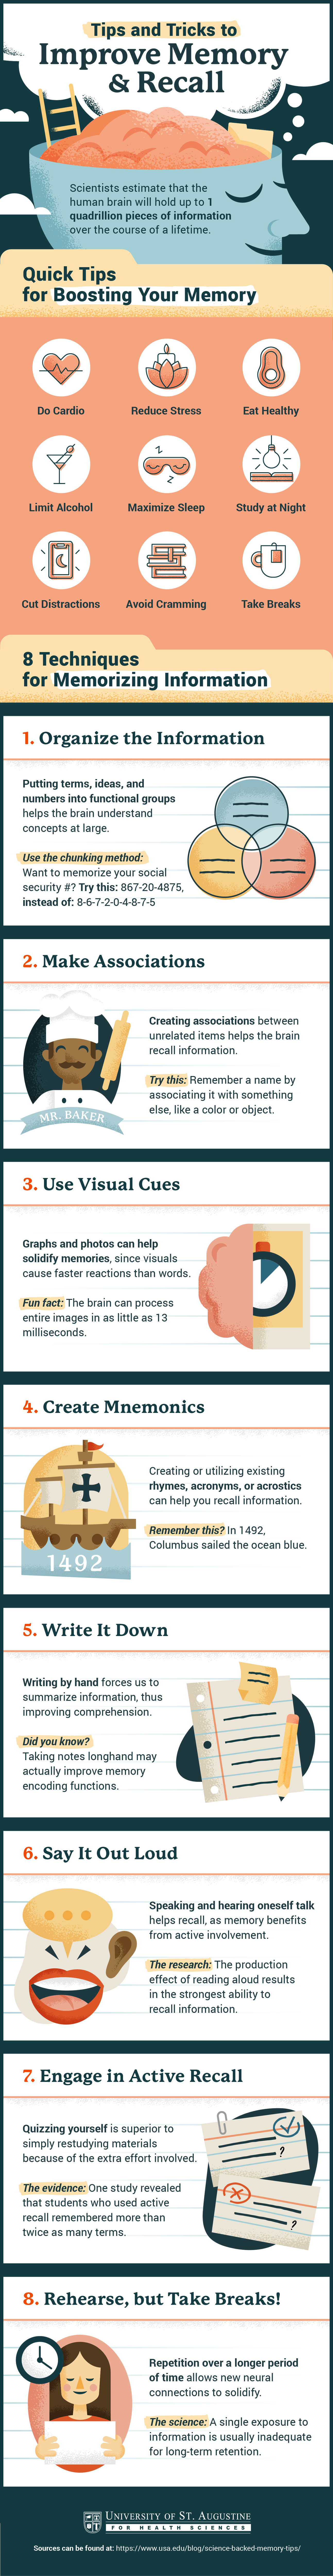 infographic_improve memory & recall